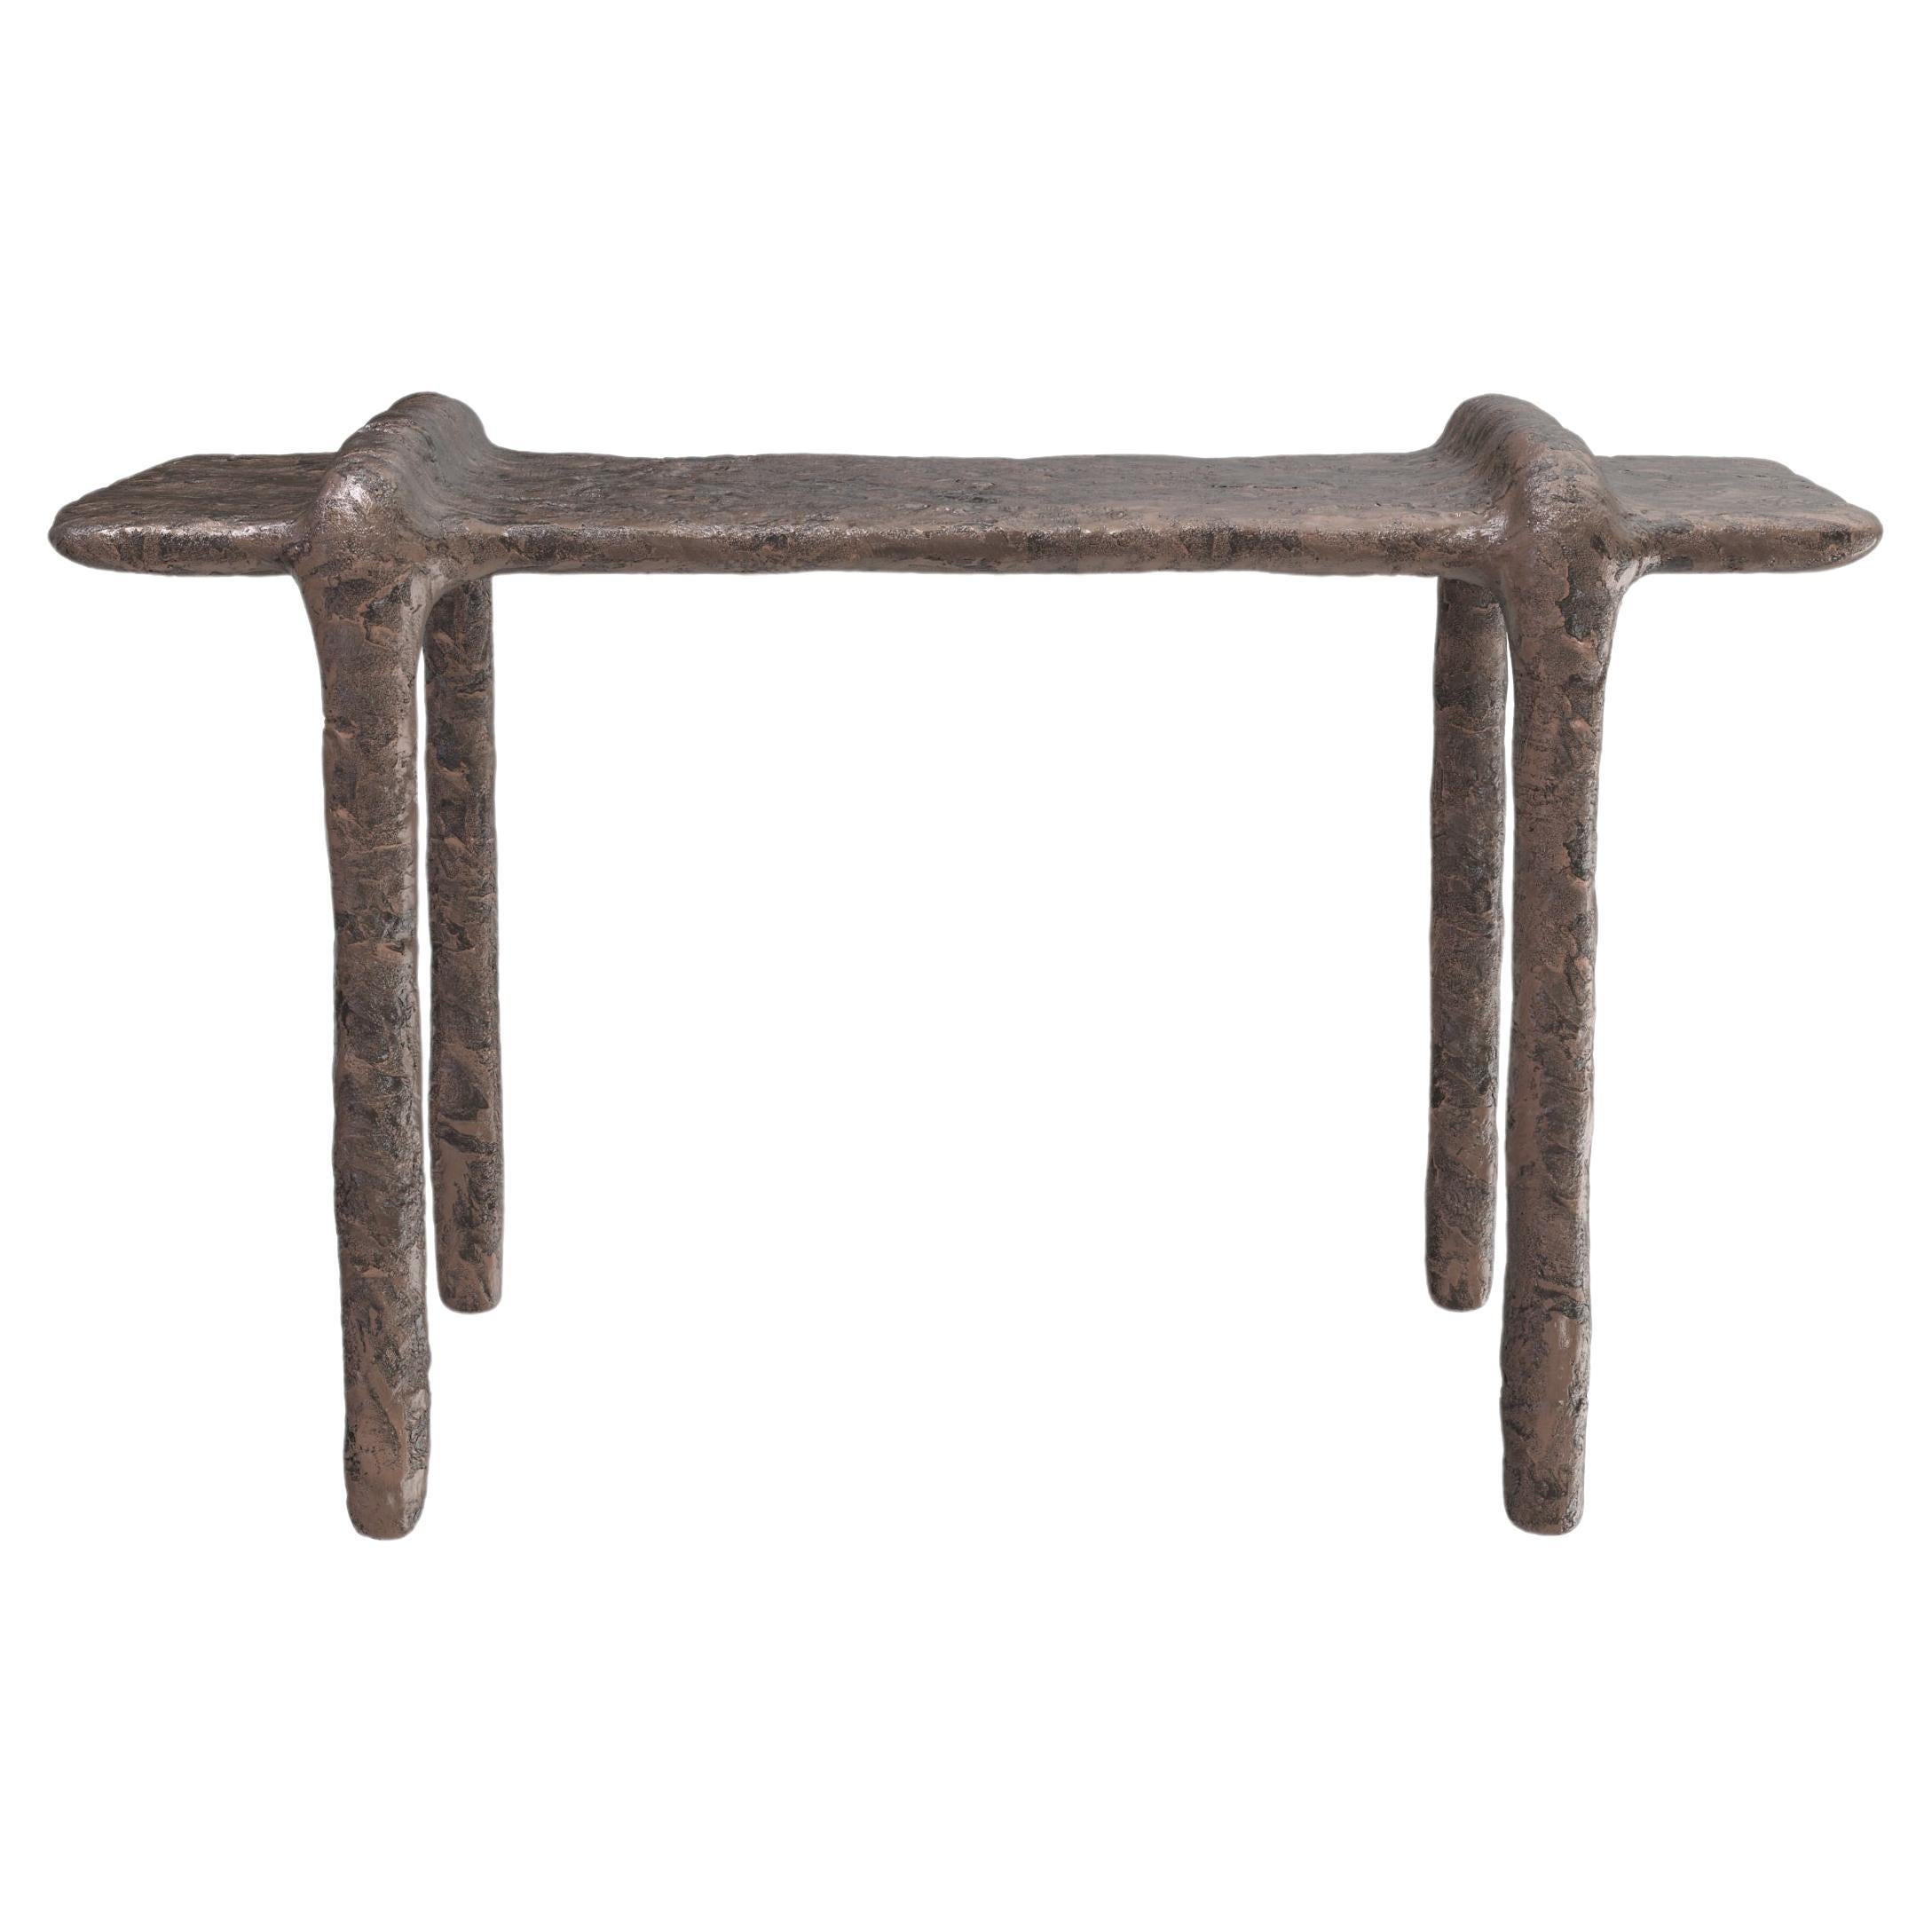 Contemporary Limited Edition Bronze Side Table, Ala V1 by Edizione Limitata For Sale